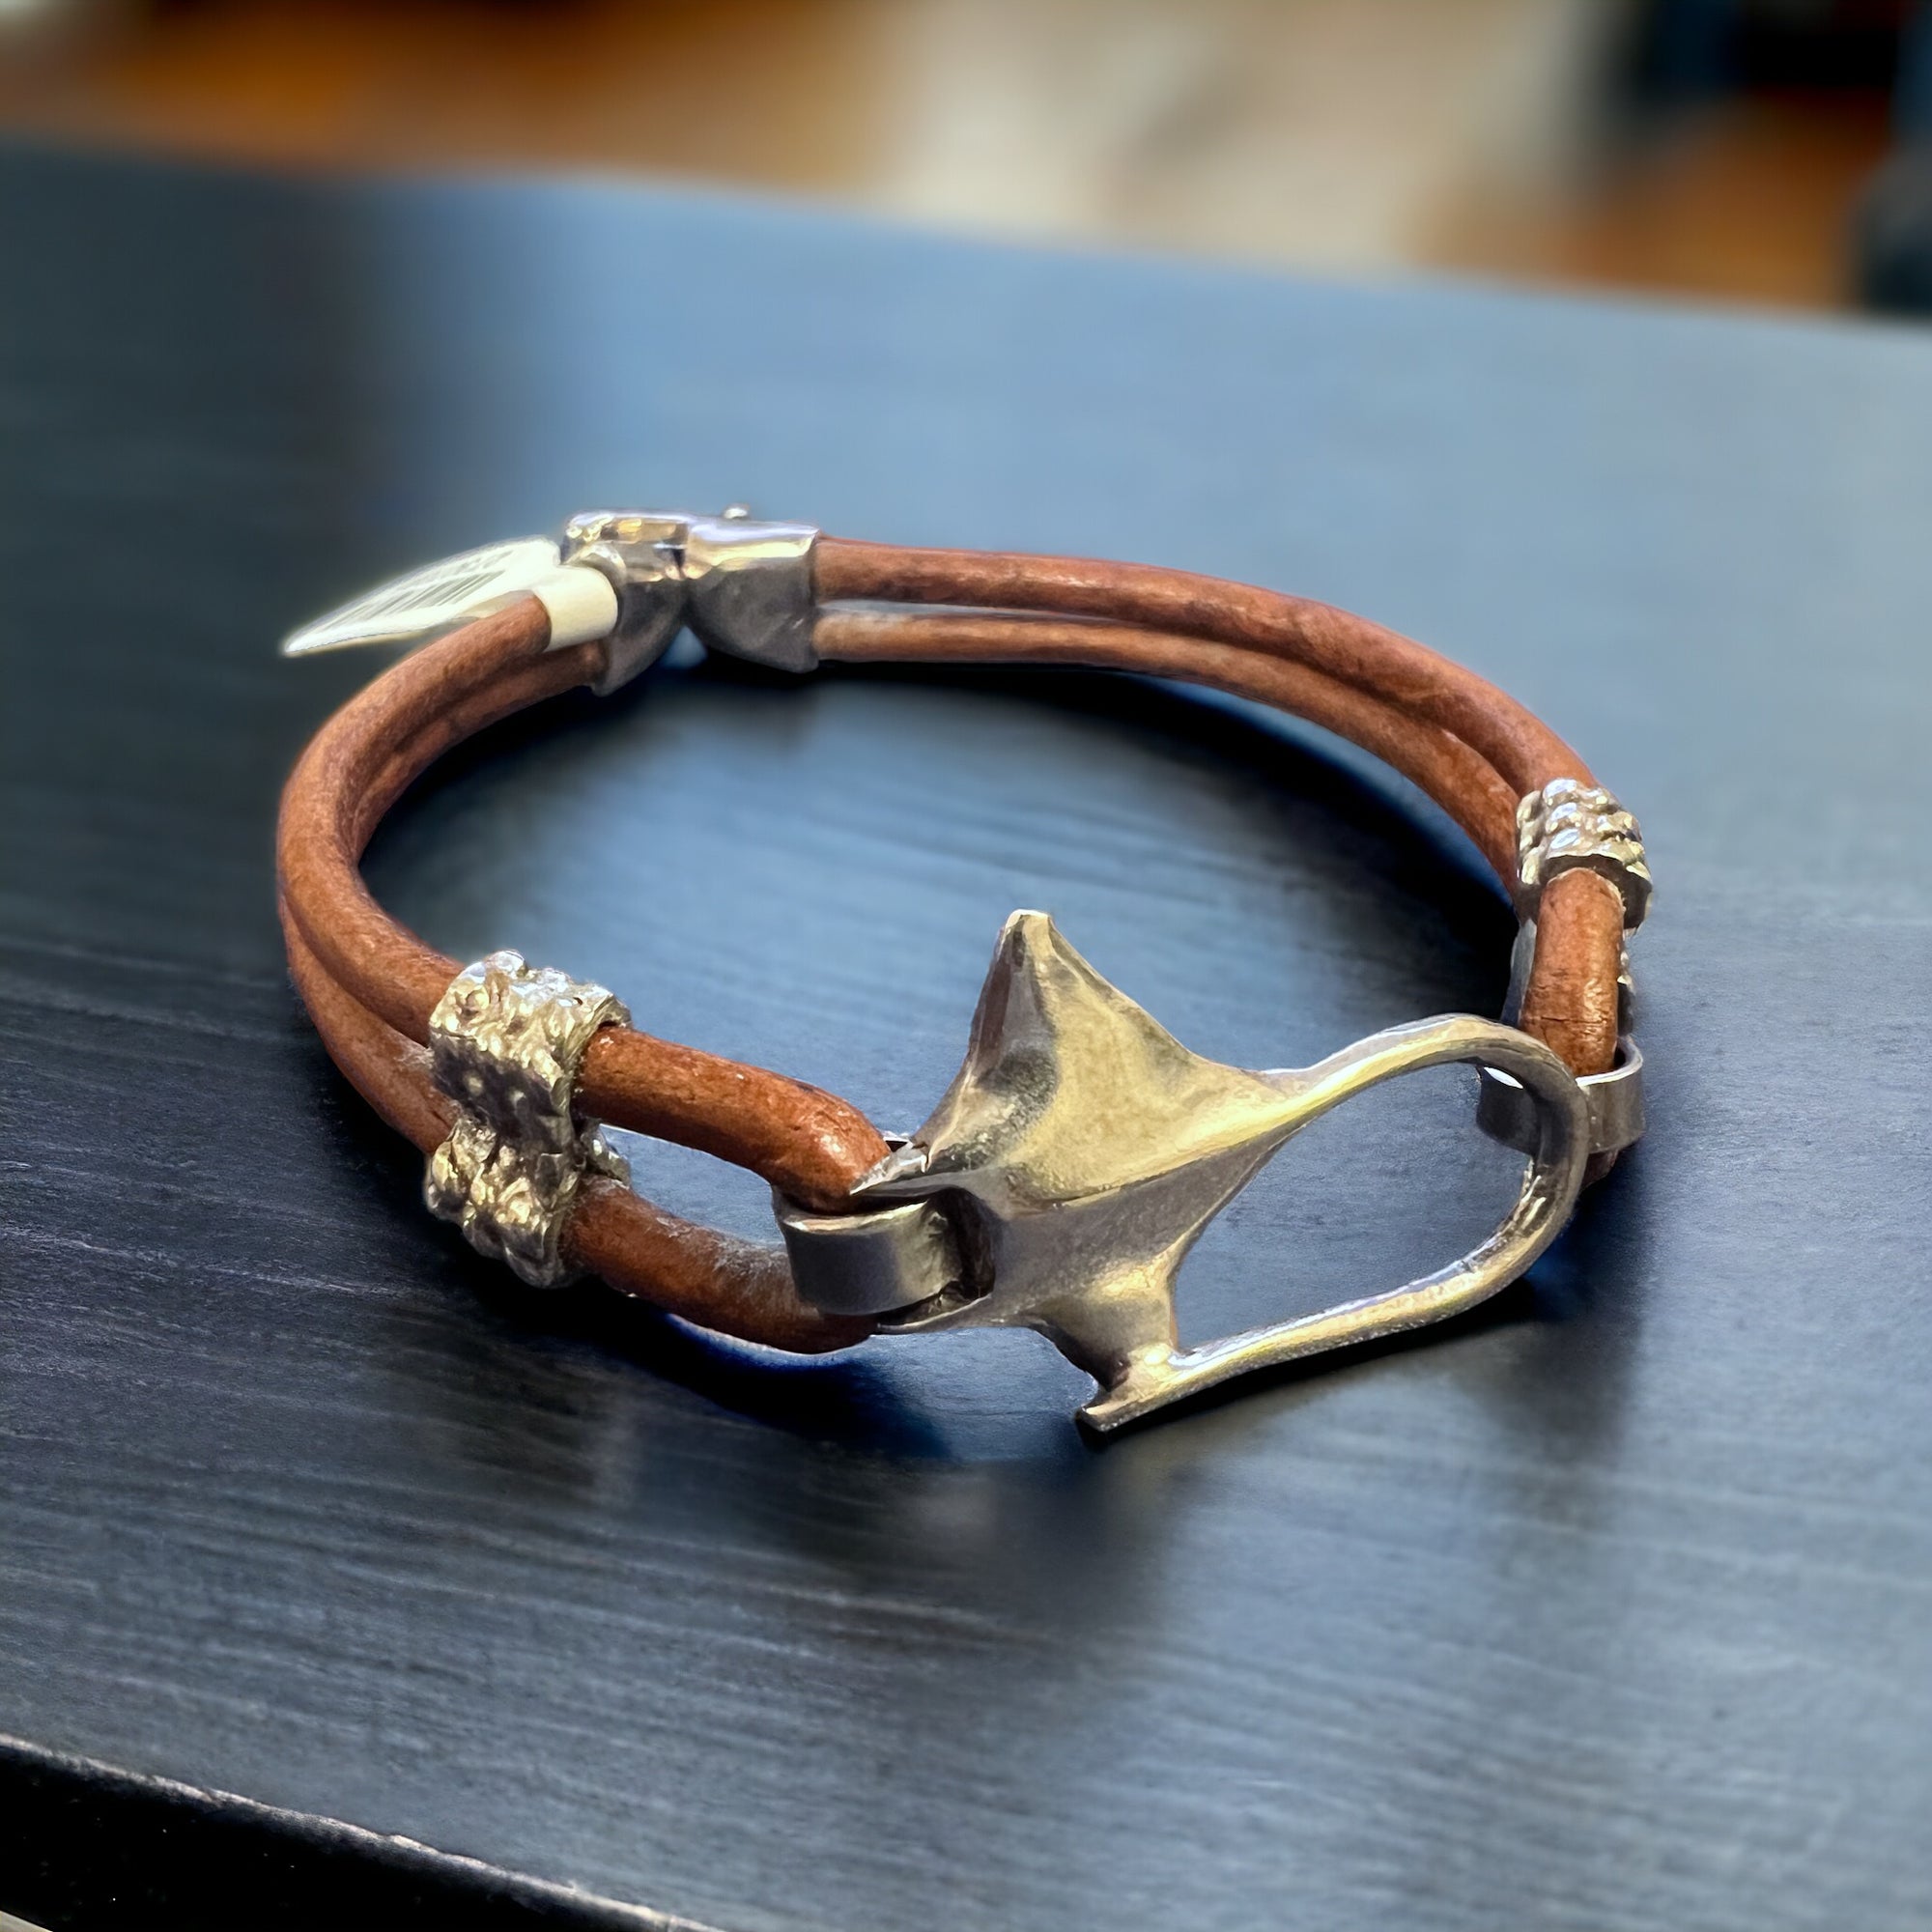 Sting Wray - Key West Nautical Bracelet - Hand-cast silver charms on leather bracelet